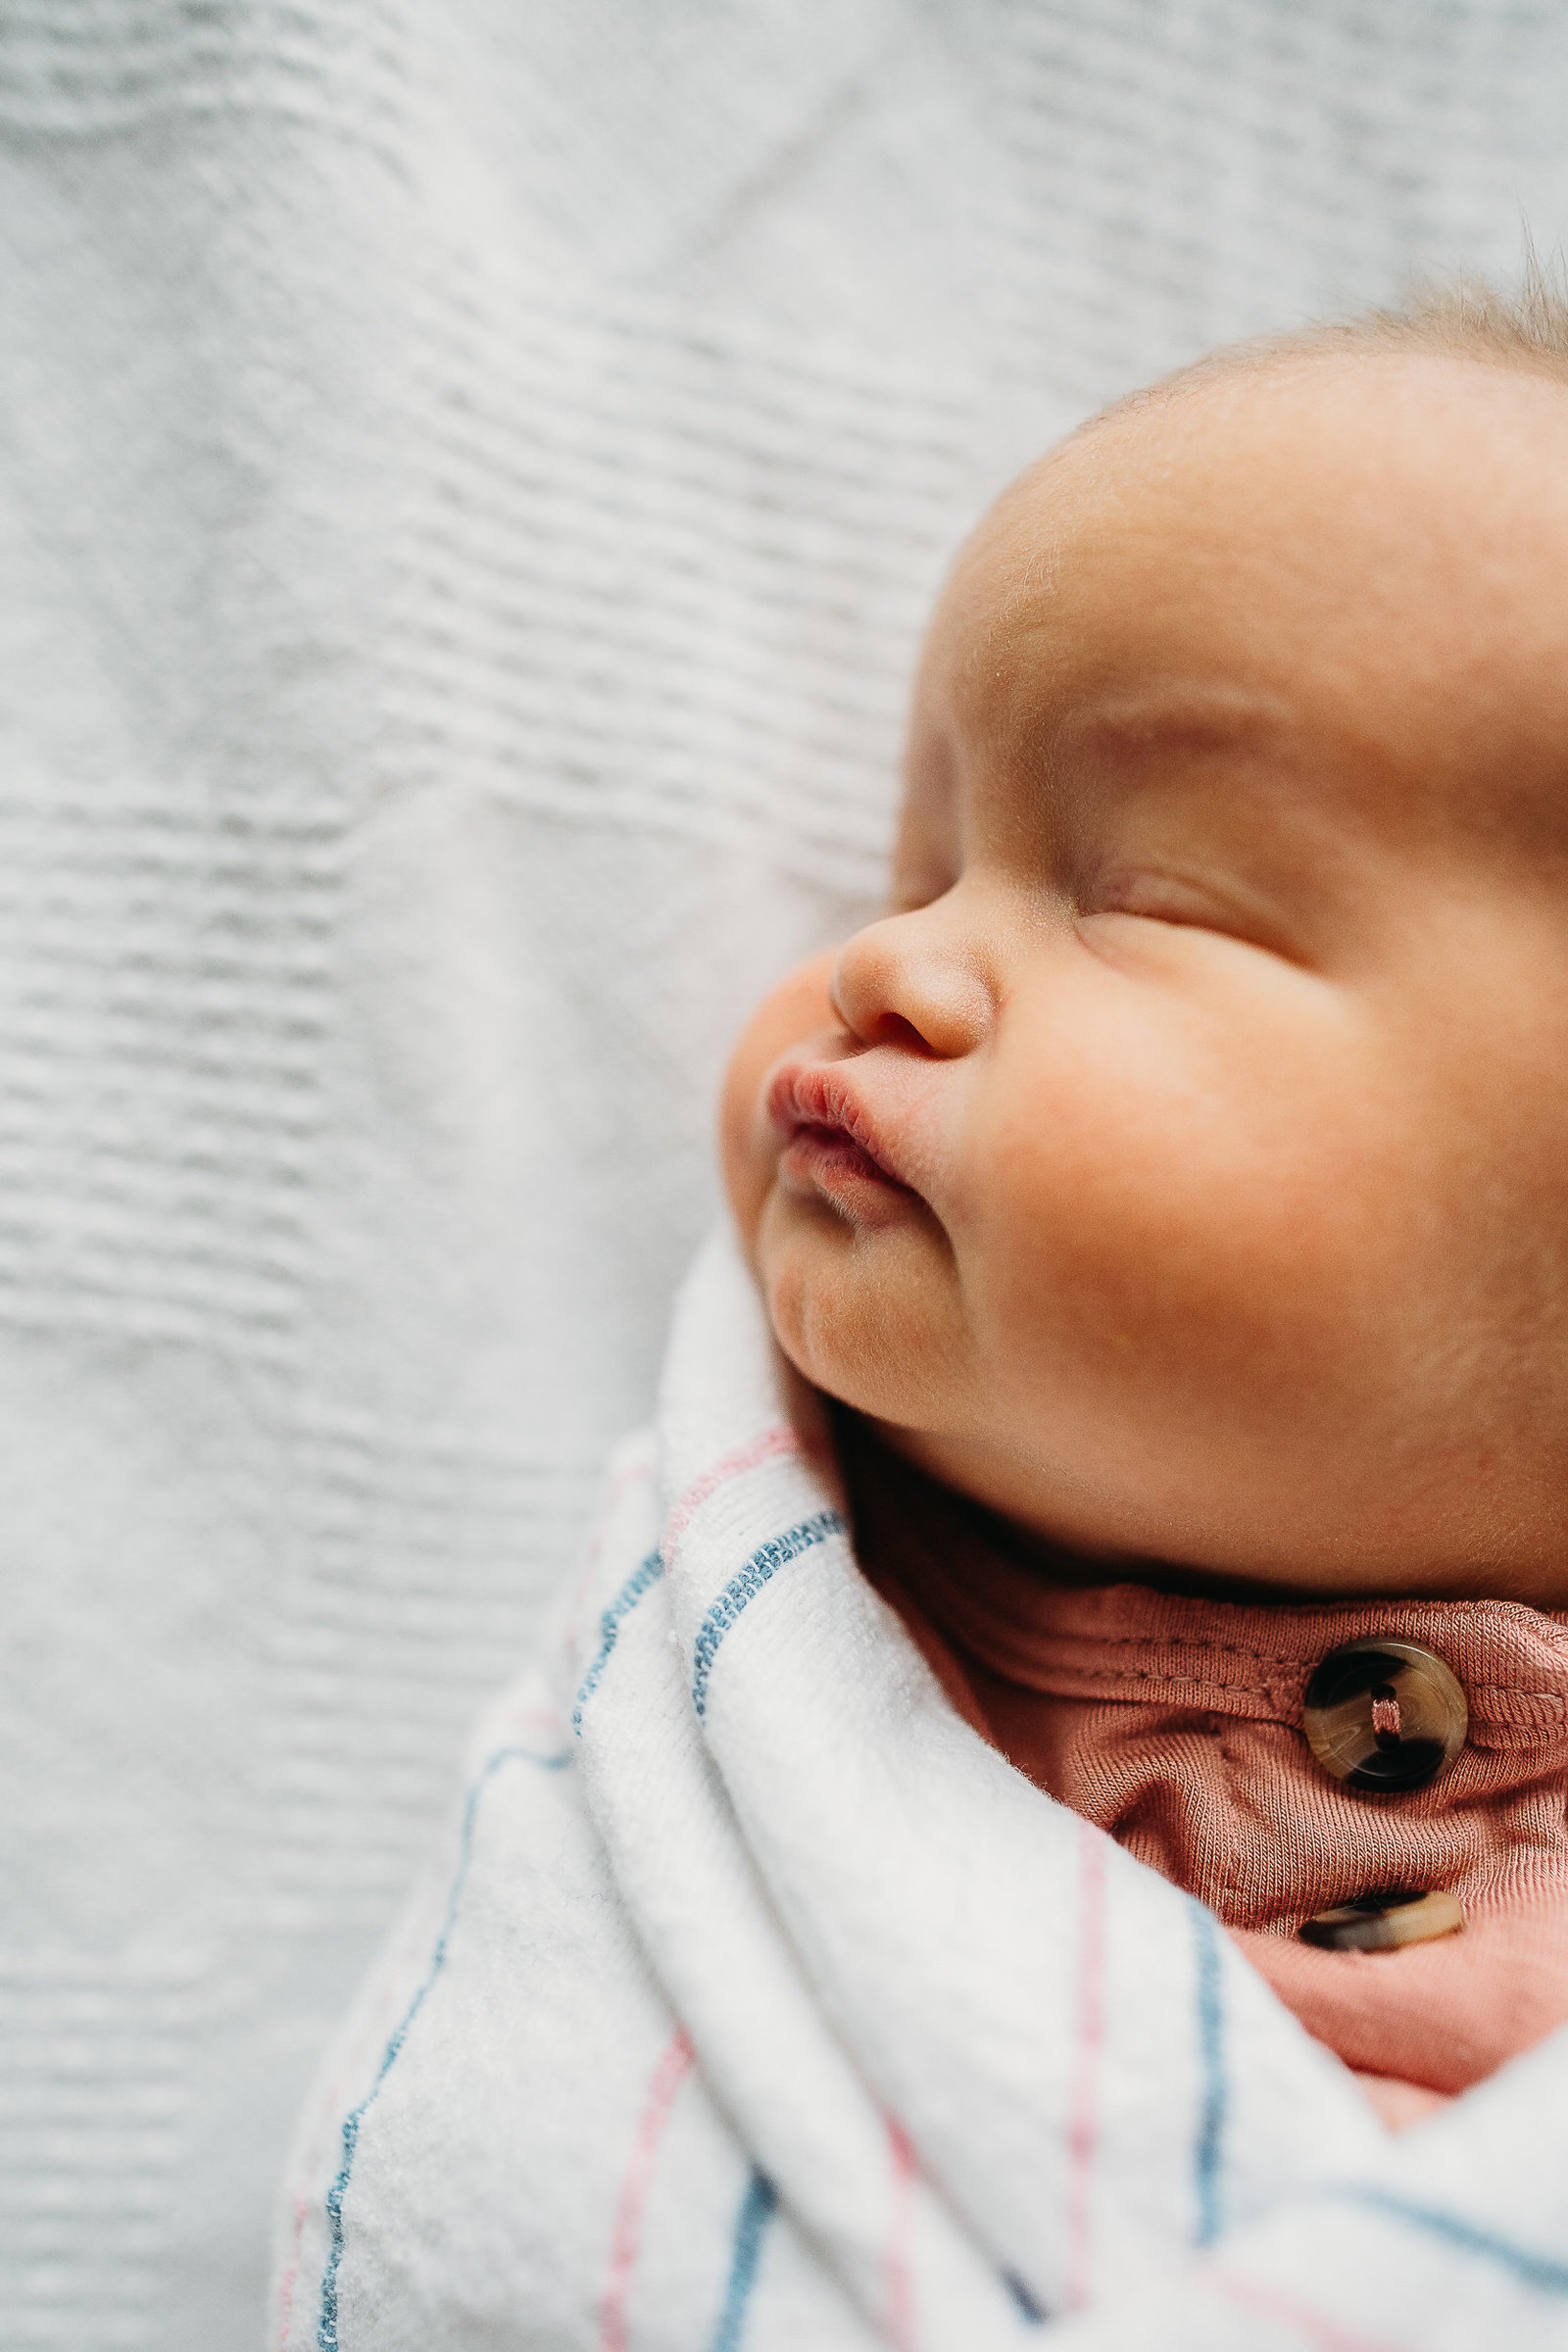 newborn sleeping during hospital photo session in boston ma